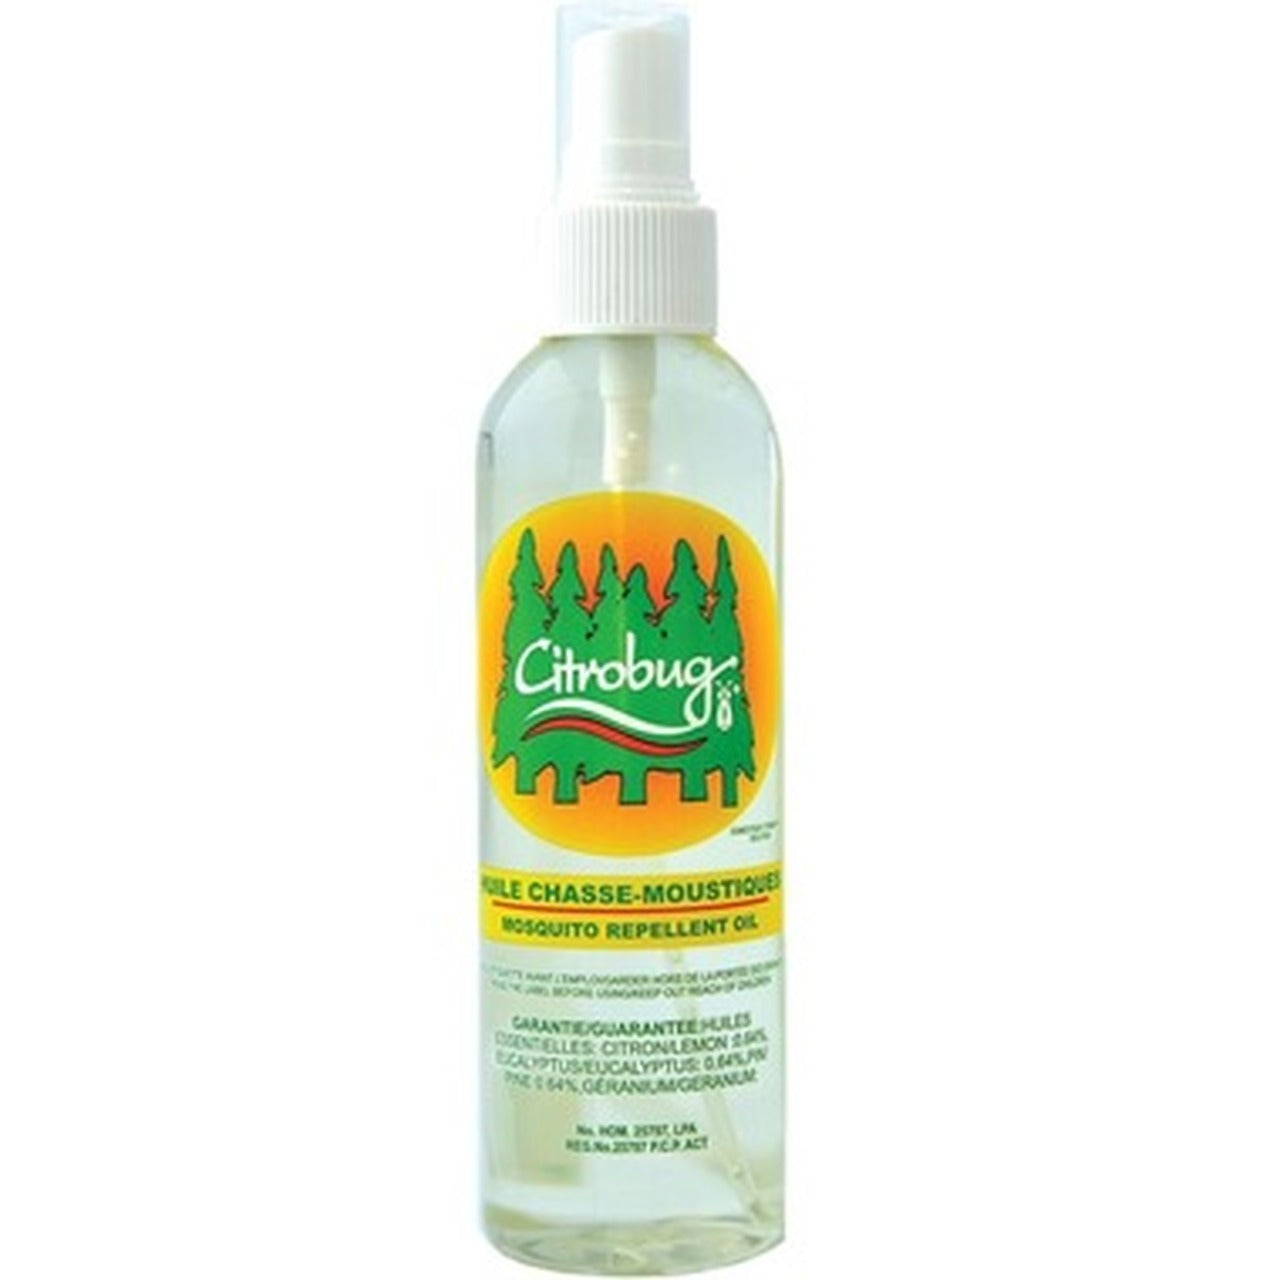 Spray Chasse moustique Citrobug - Citrobug